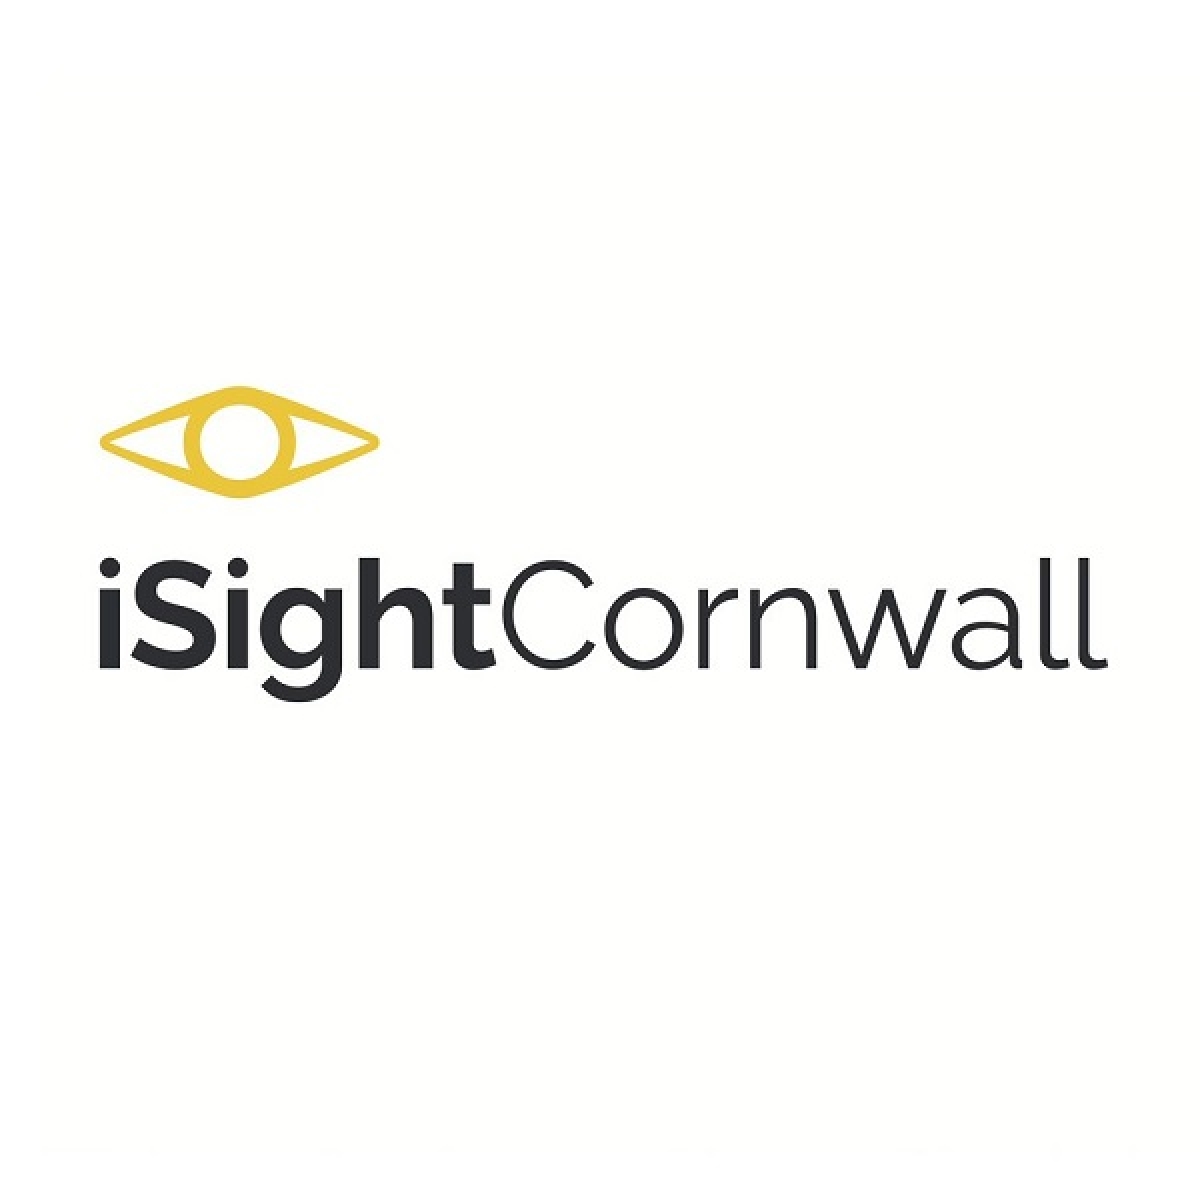 iSightCornwall Logo